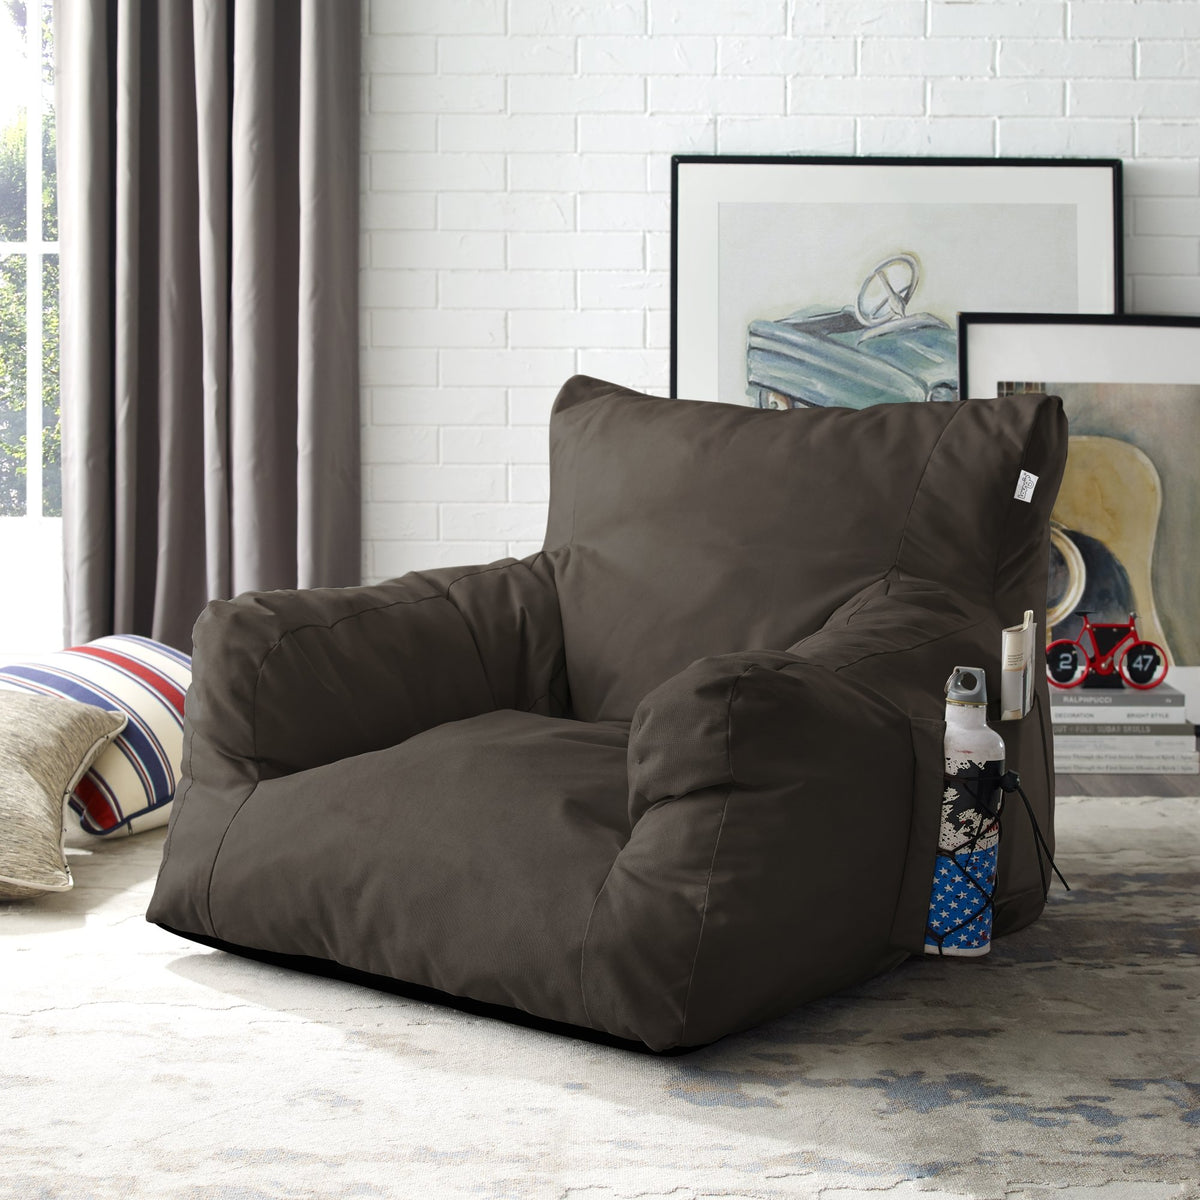 Comfortable Chairs Living Room, Korean Bean Bag Chairs